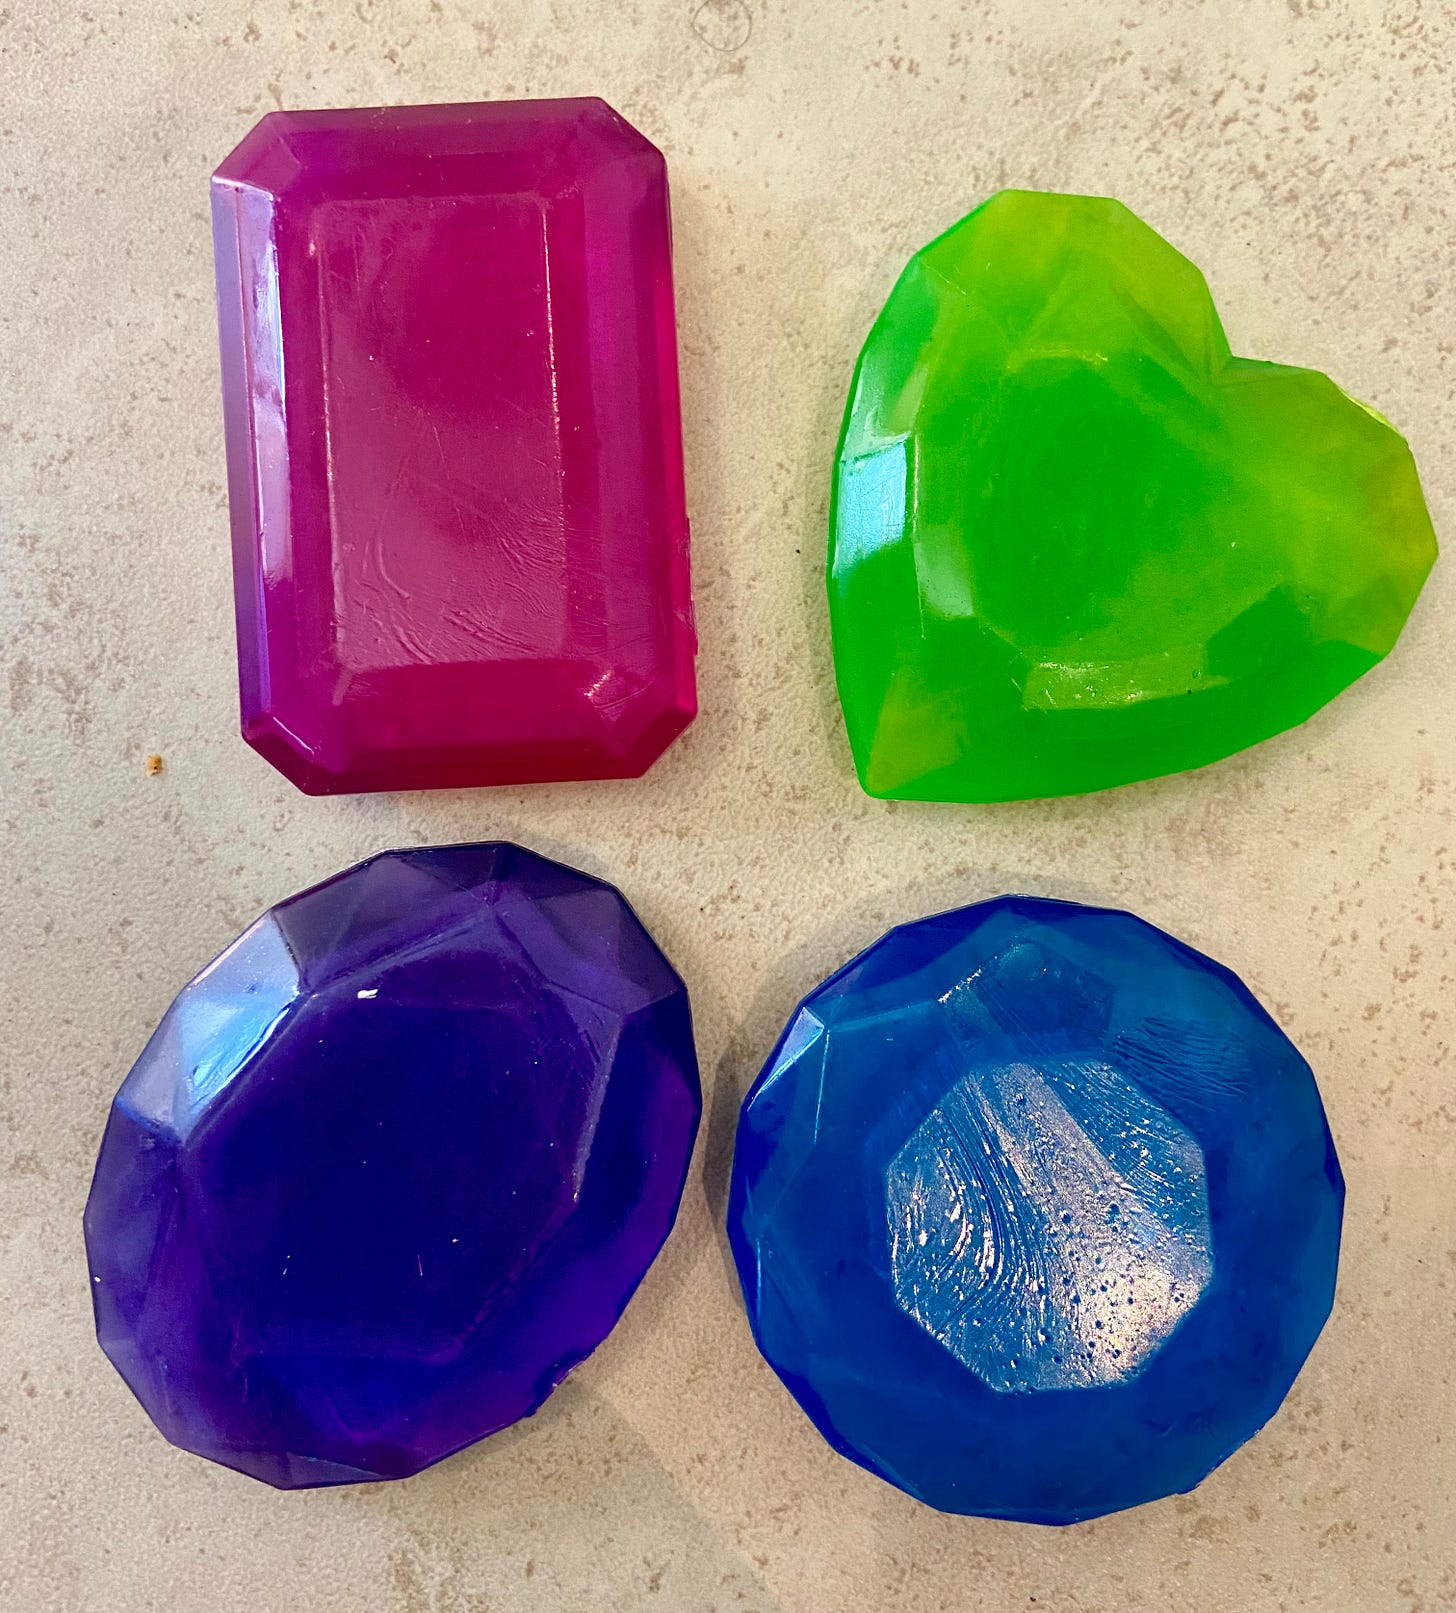 4 plastic gems of different colors